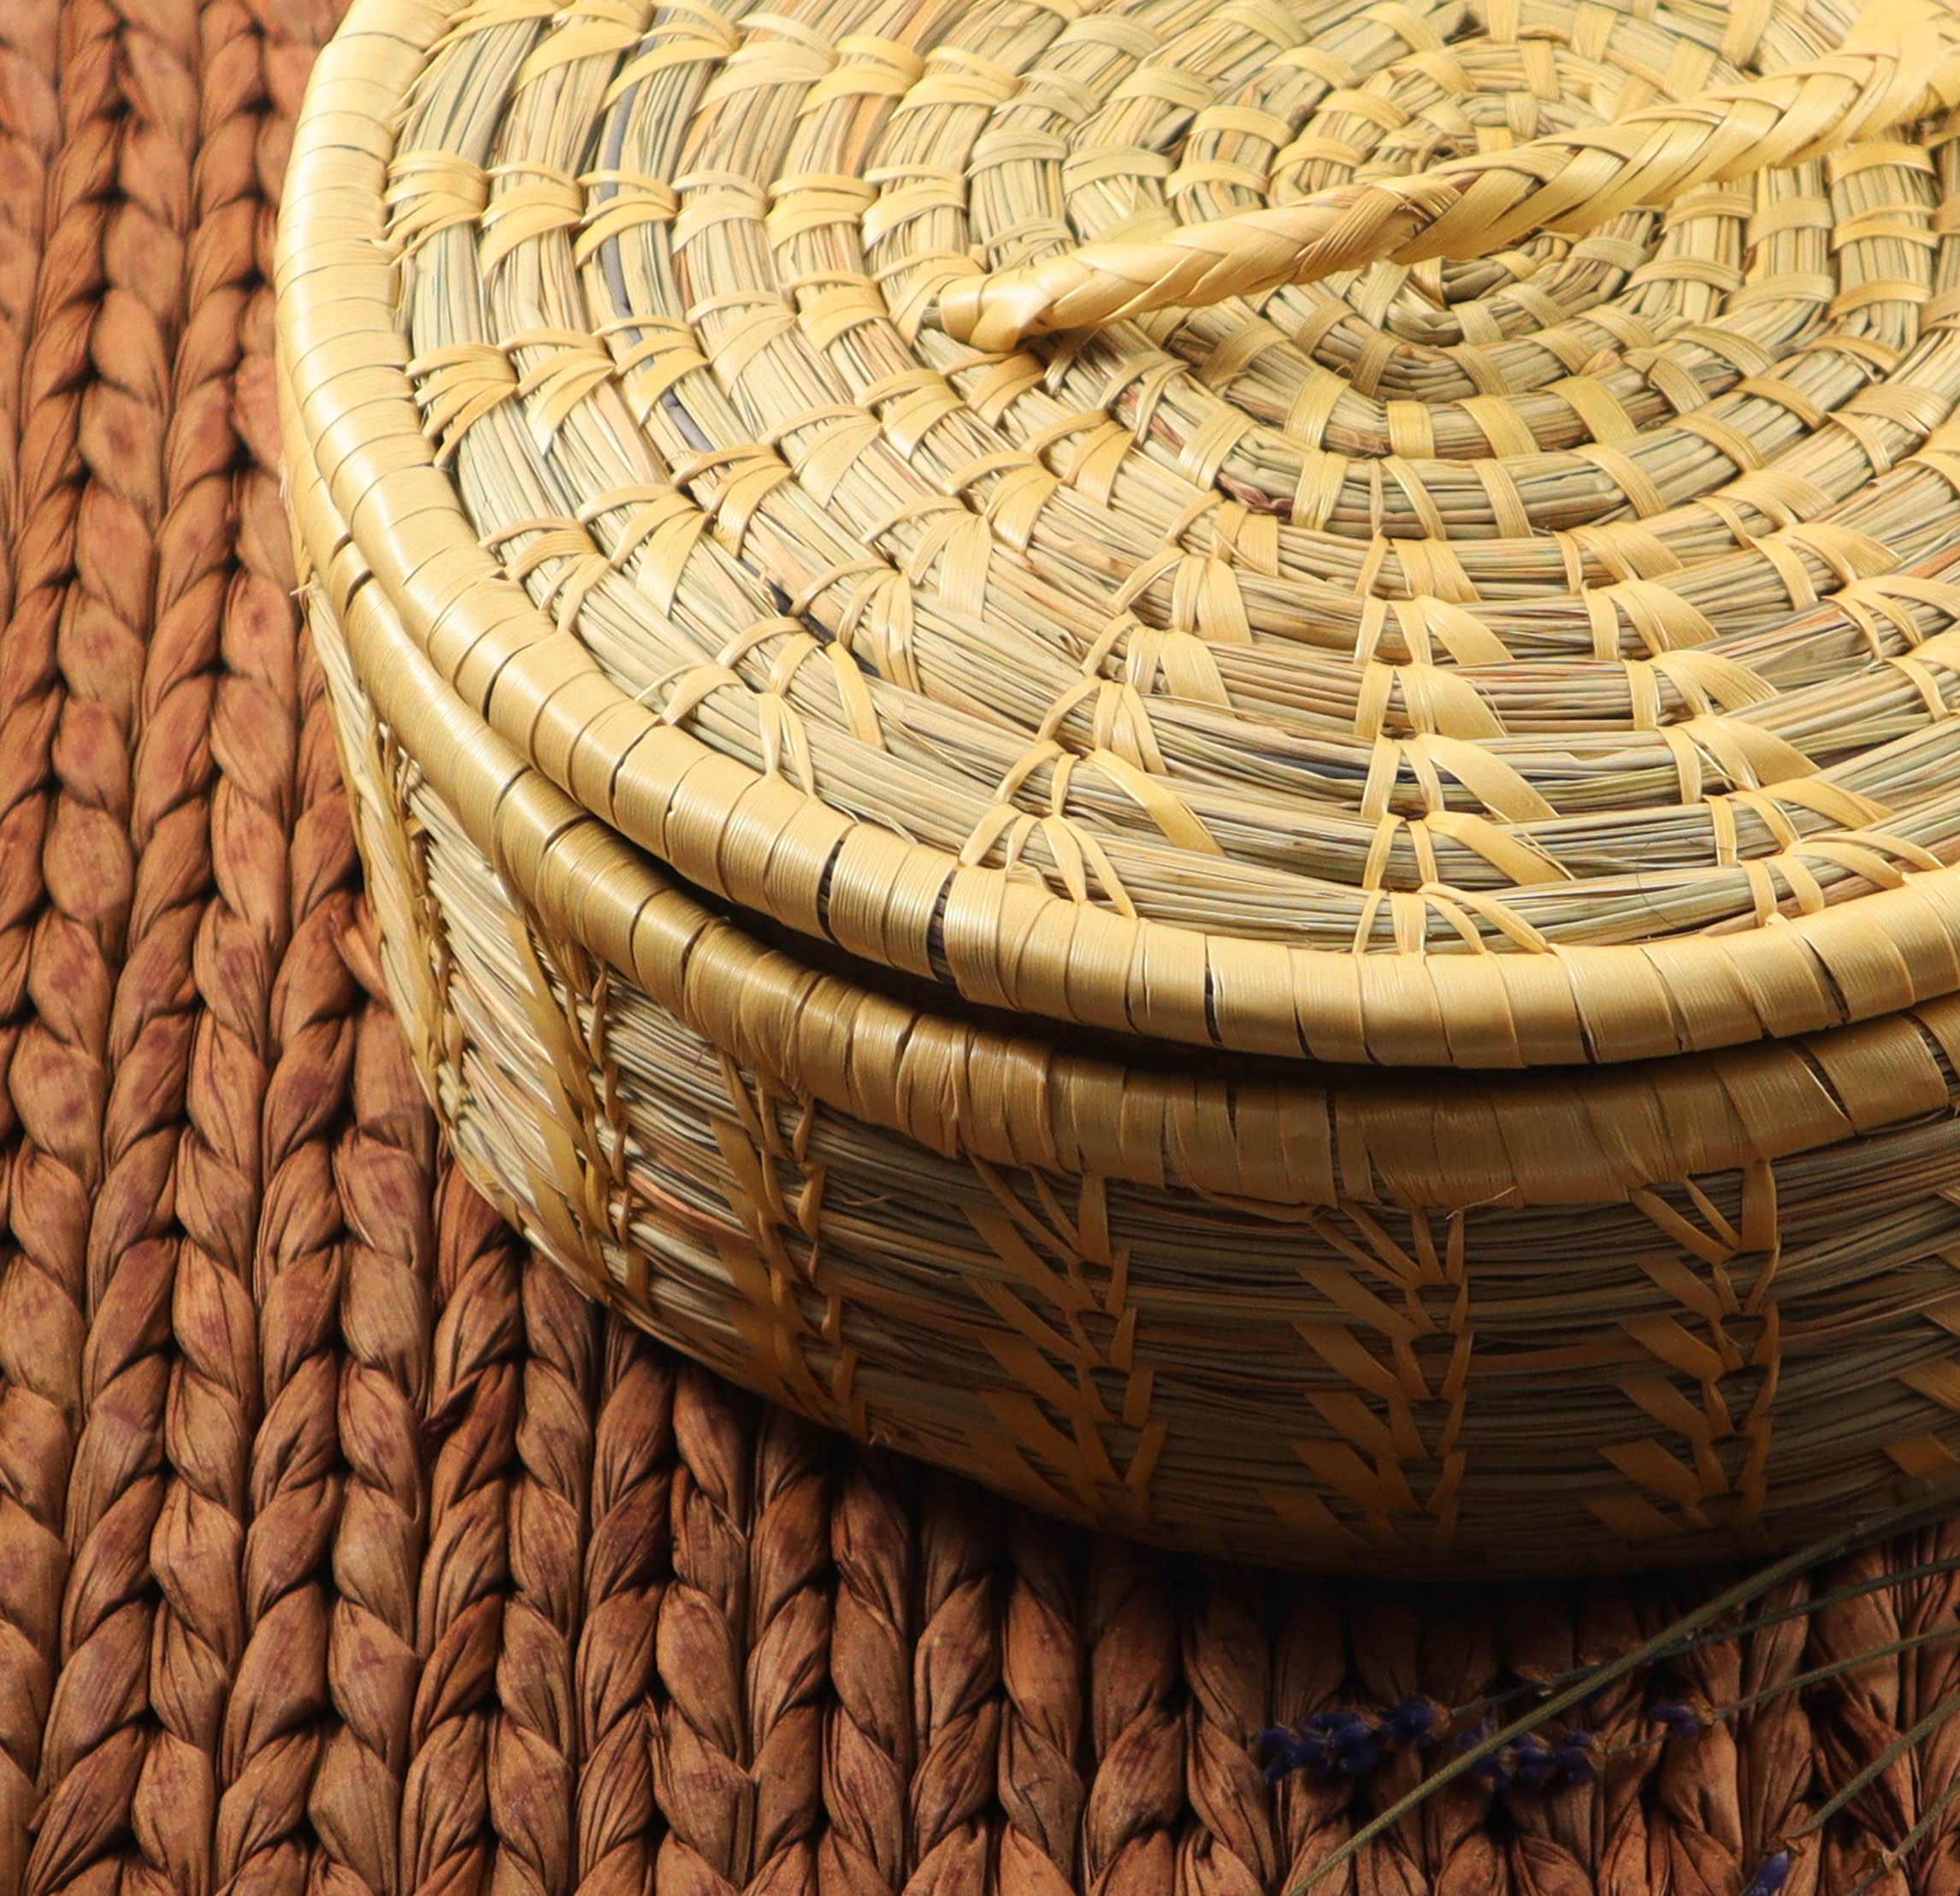 Fairtrade Large Woven Plastic Baskets